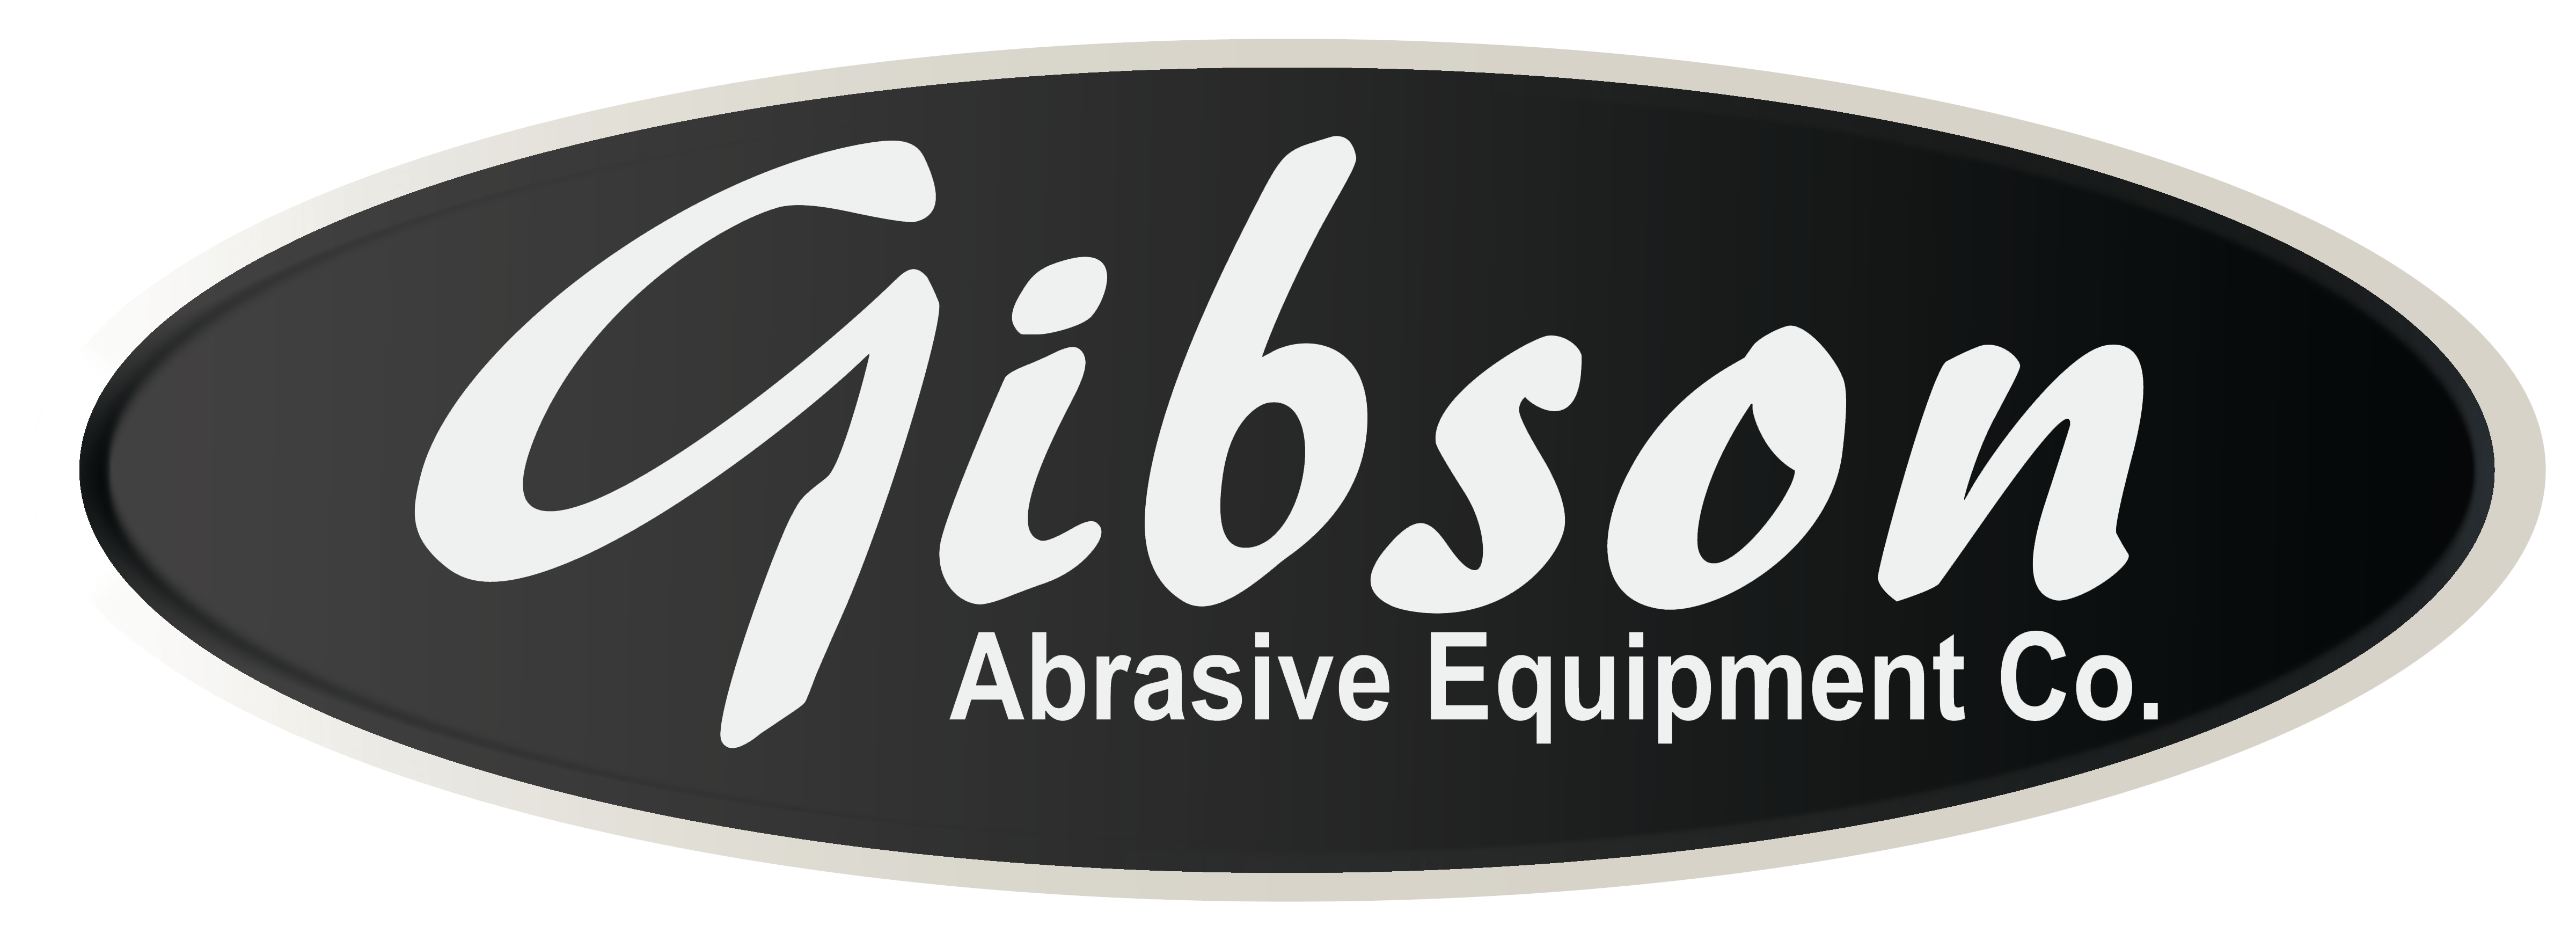 Gibson-Abrasive-Equipment-Logo.png